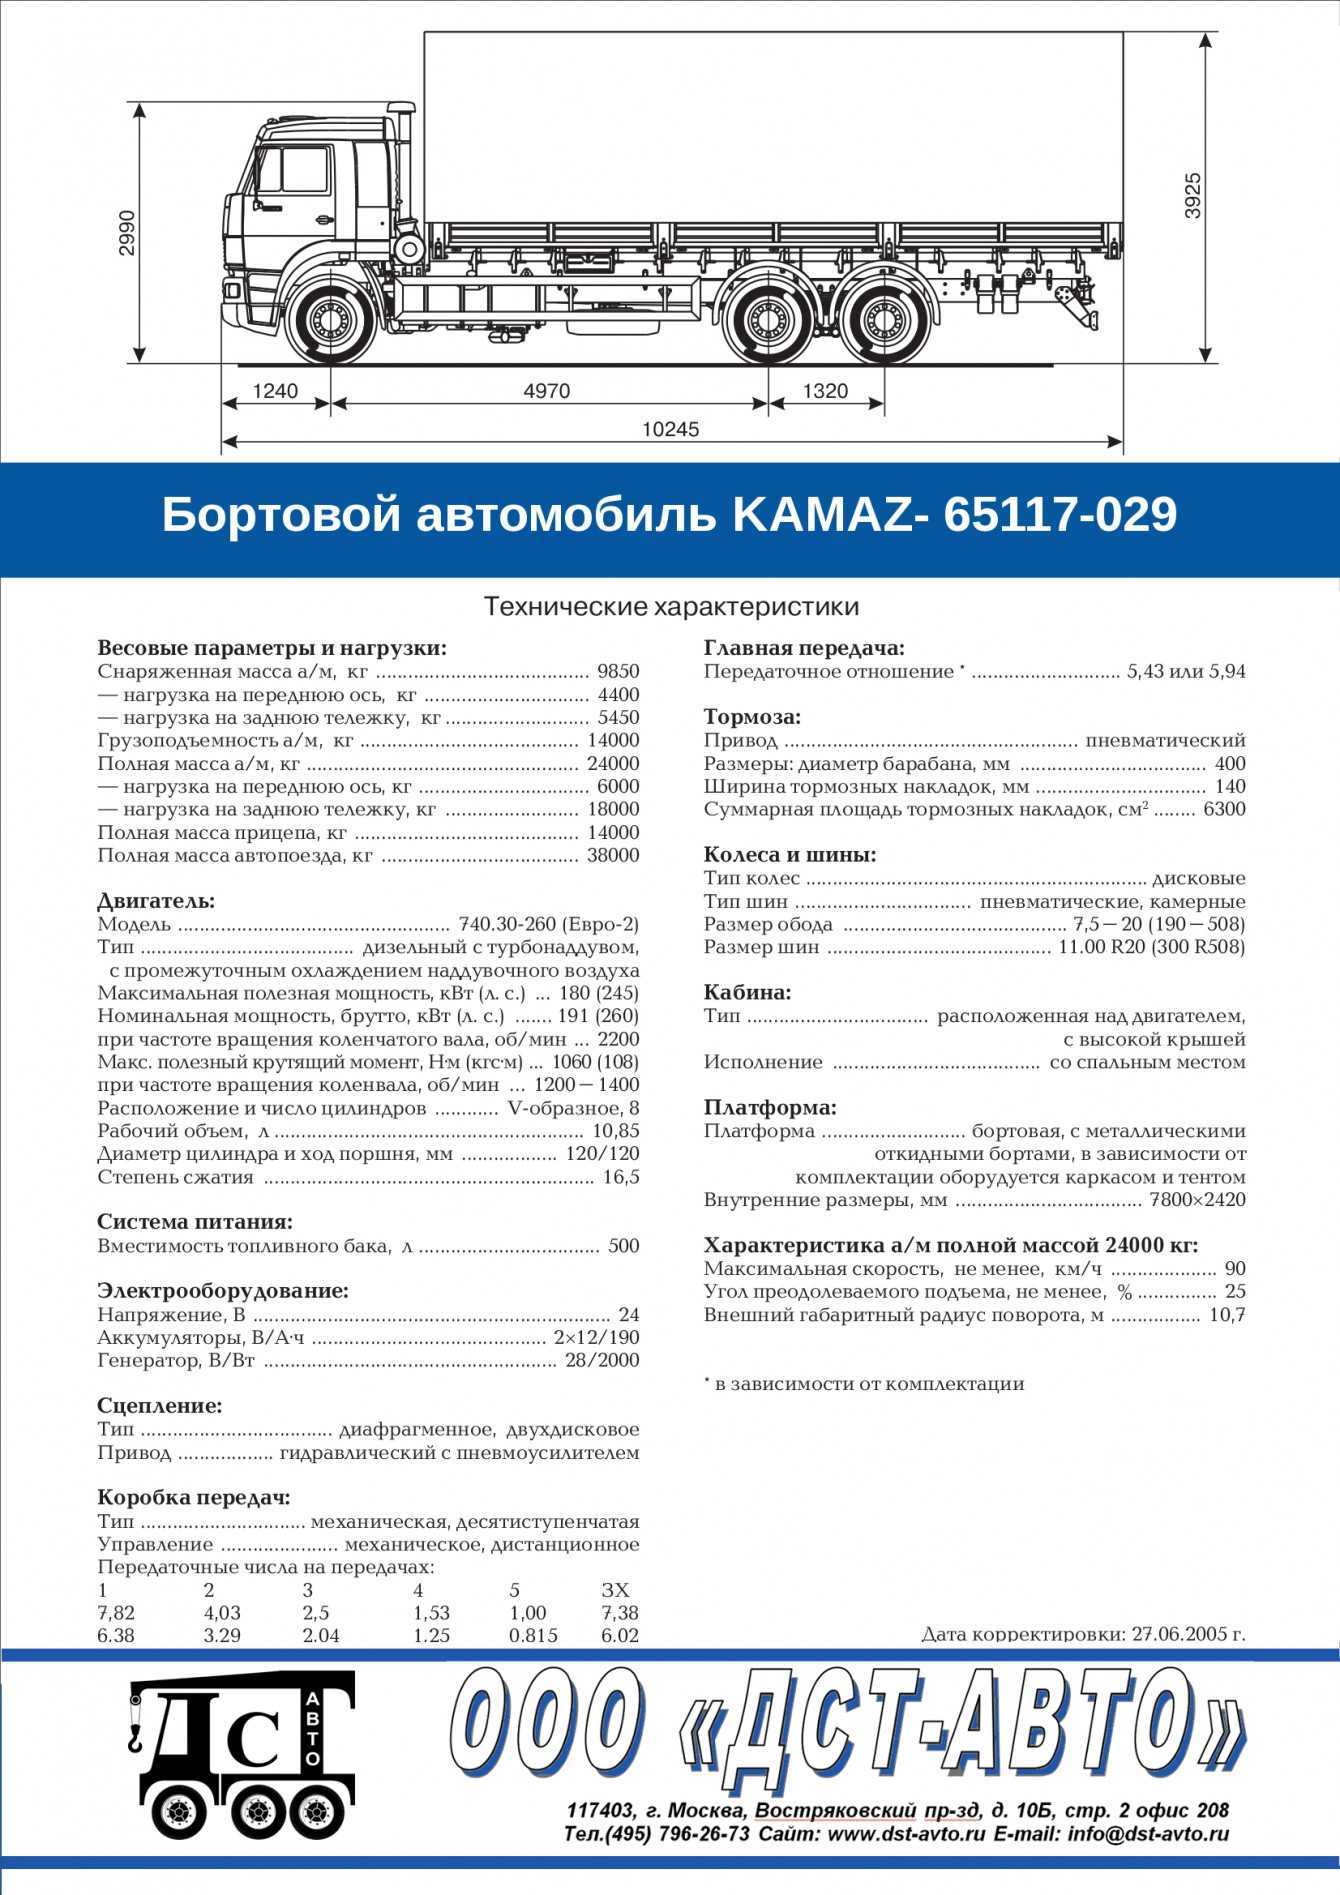 Камаз 65117: технические характеристики, фото бортового, расход топлива, габариты | грузовик.биз